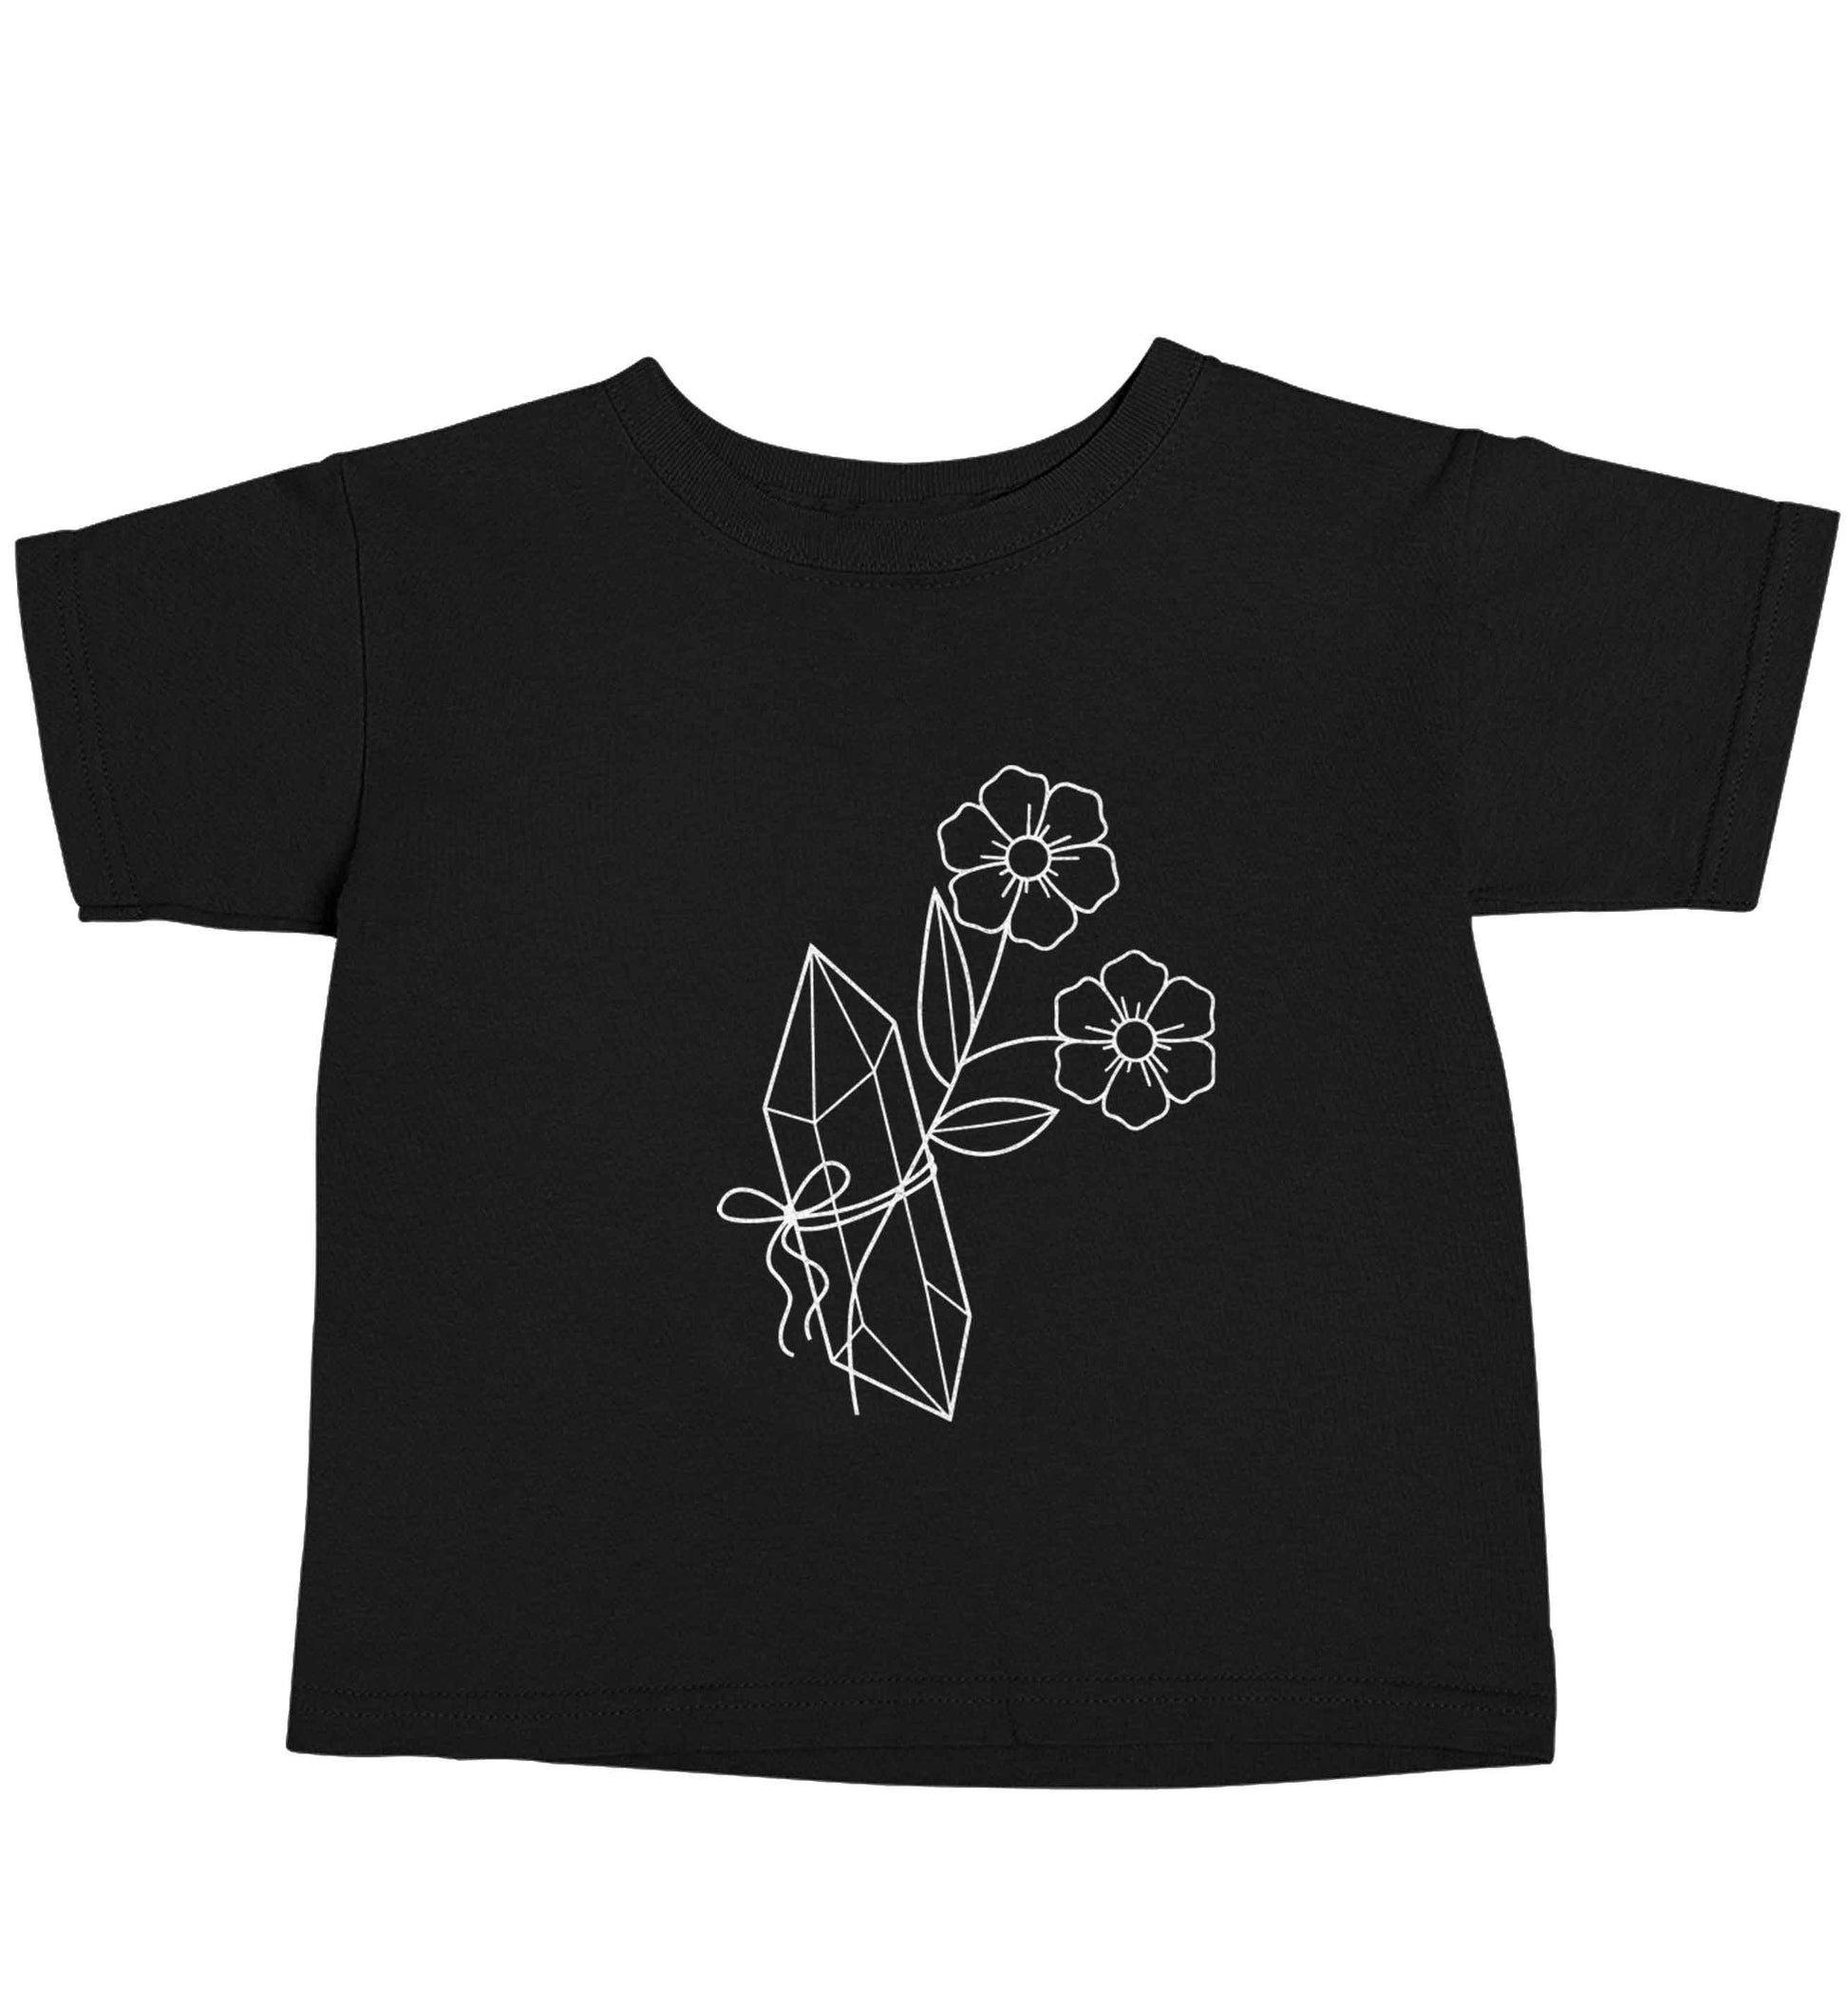 Crystal flower illustration Black baby toddler Tshirt 2 years